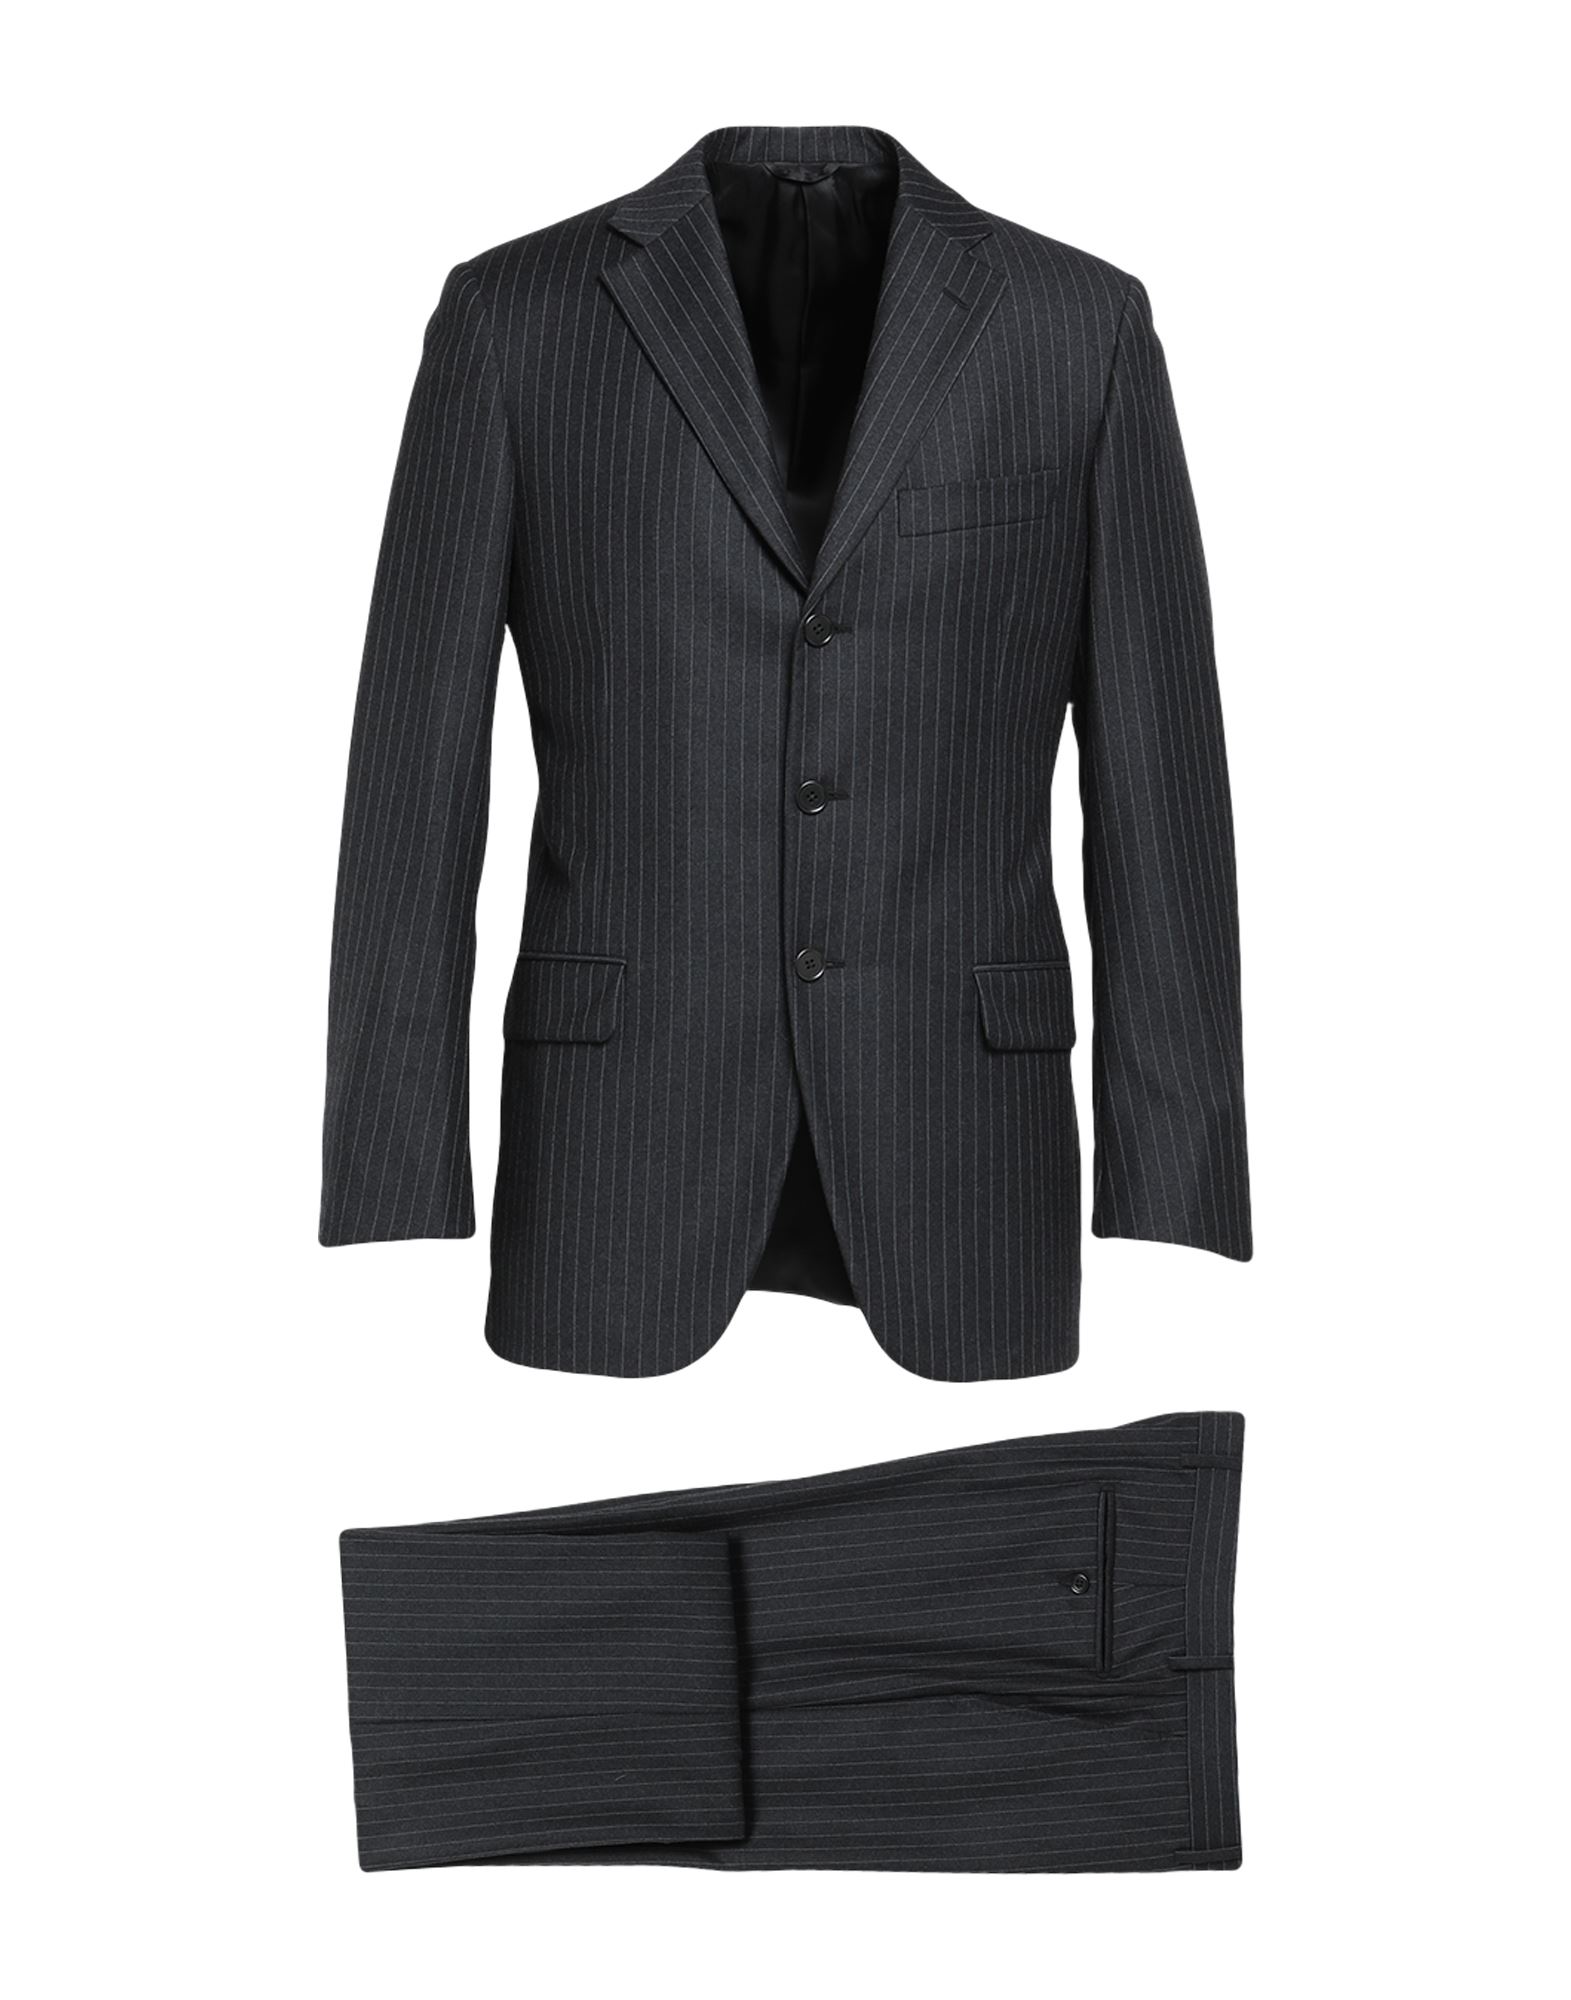 BURBERRY Suits | Smart Closet